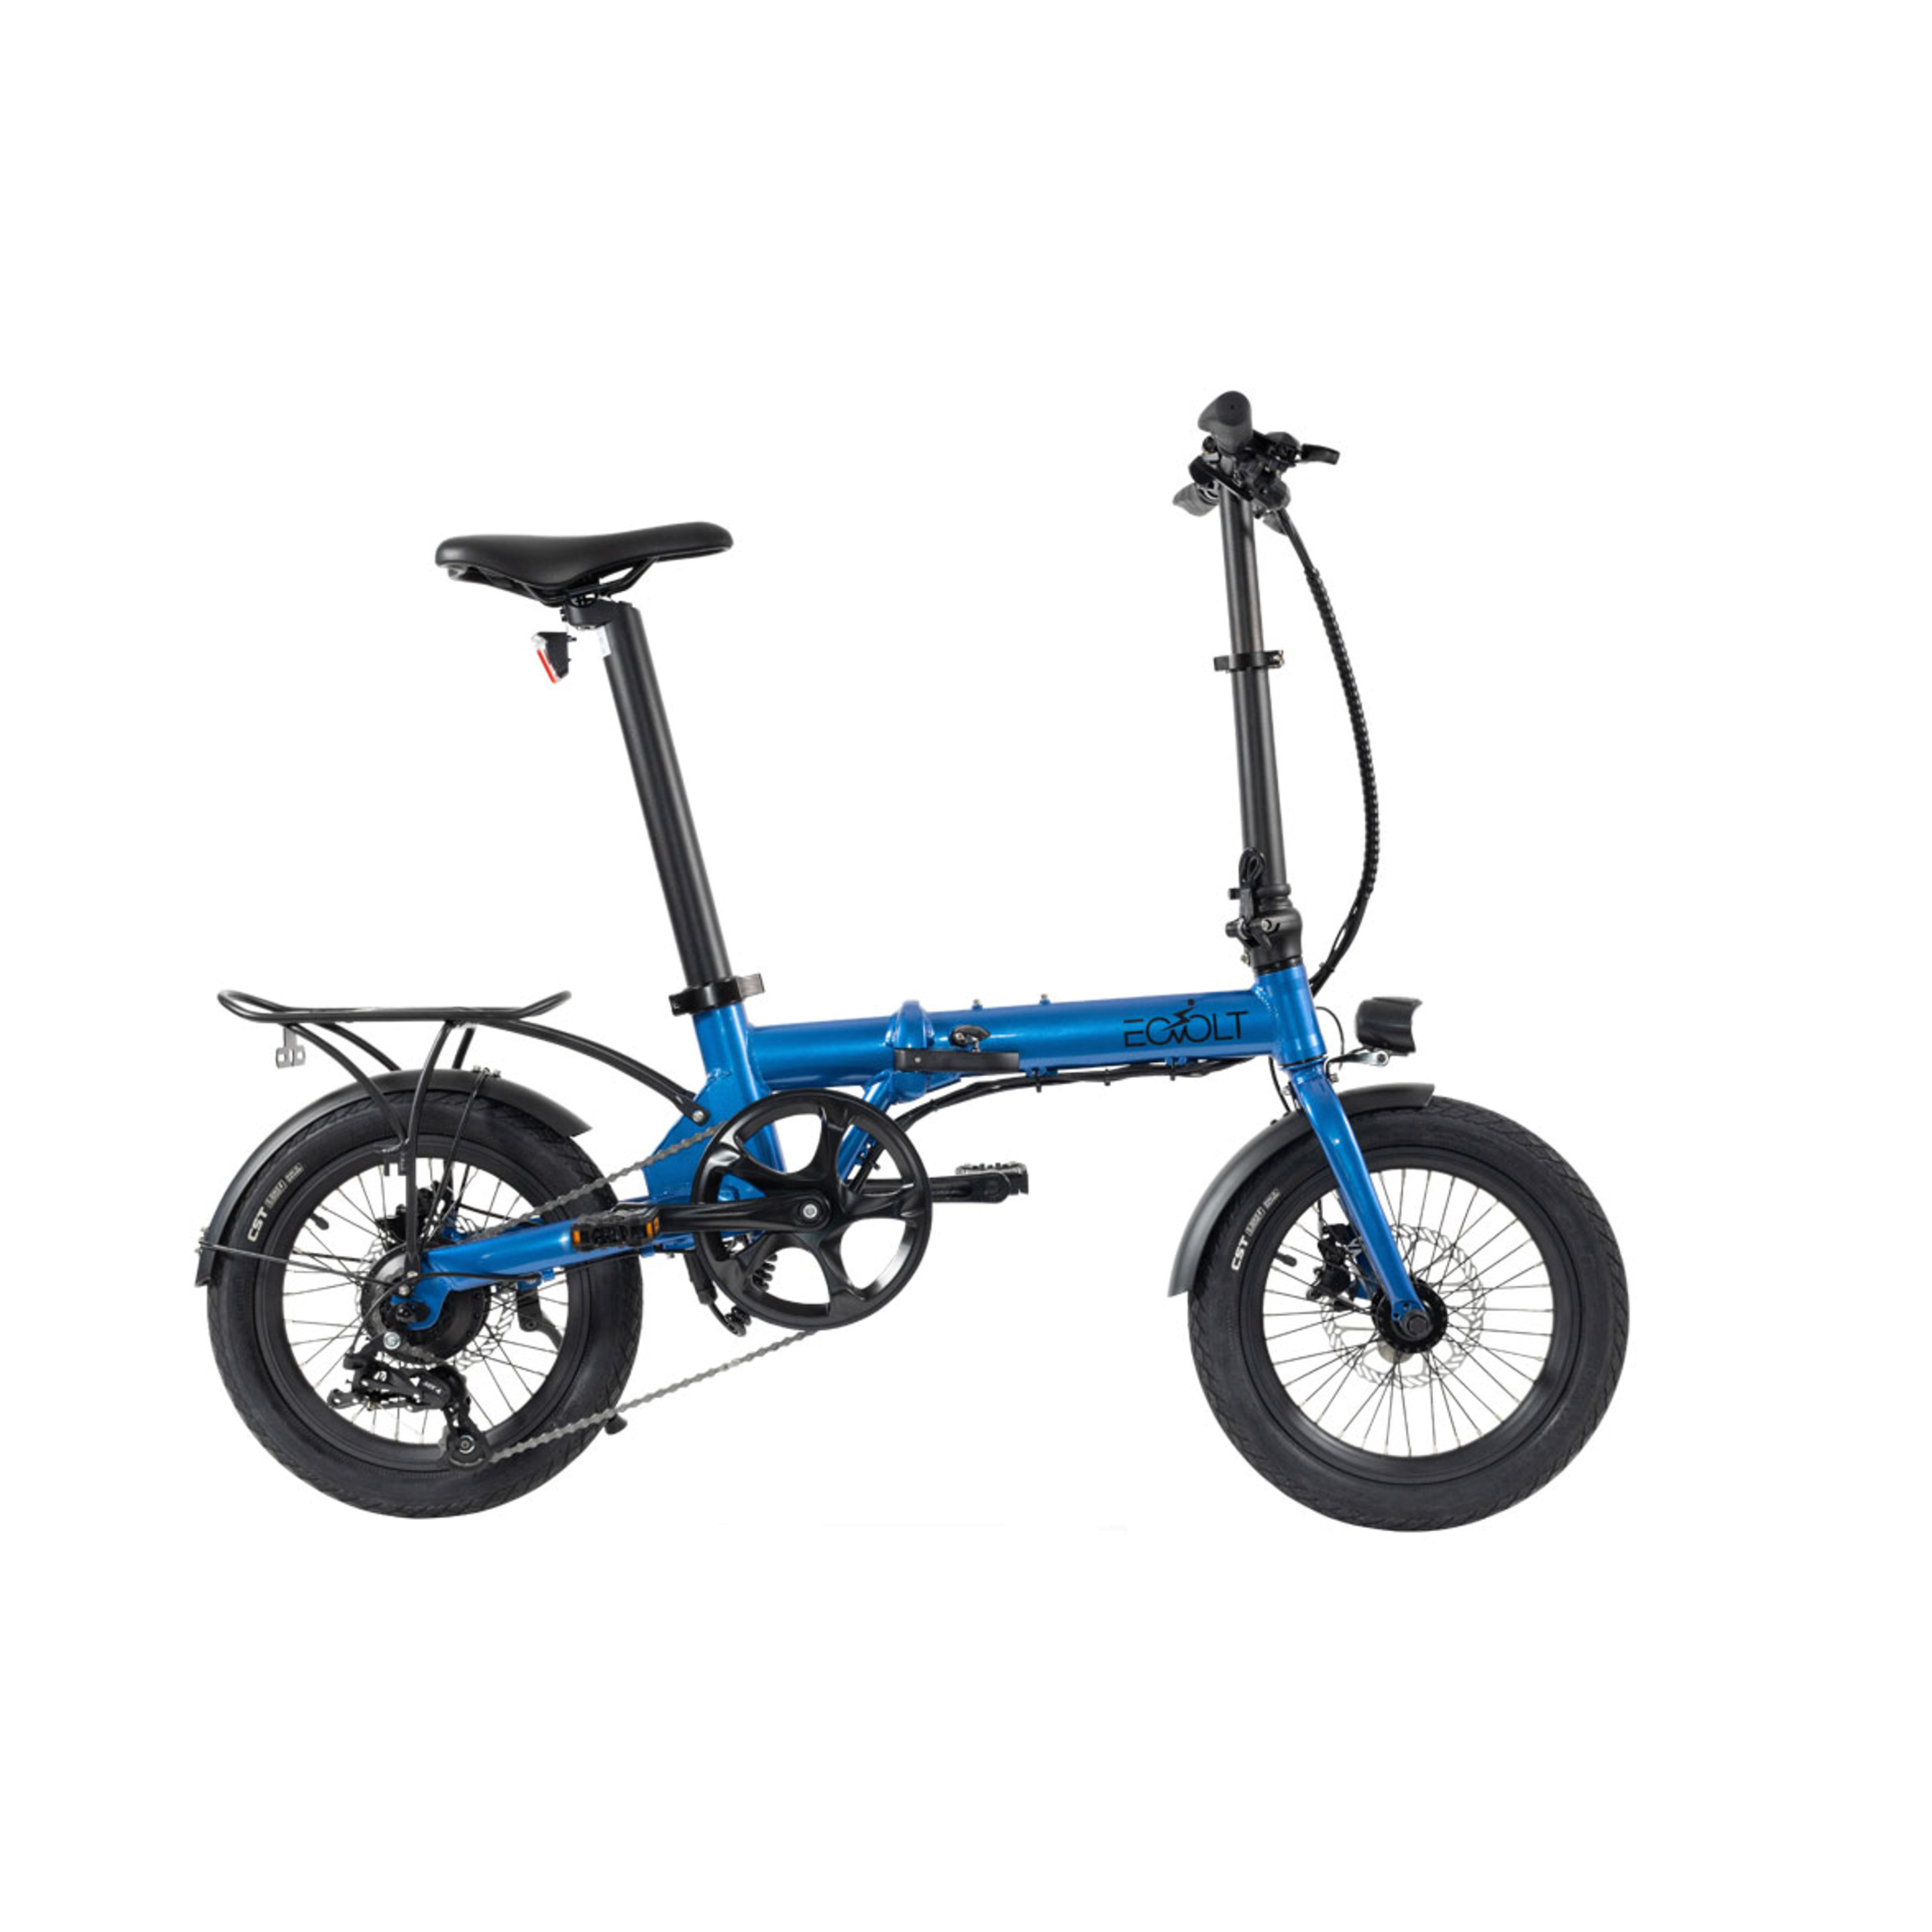 Bicicleta Plegable Vital Gym City 4 Speed Eovol - azul - 